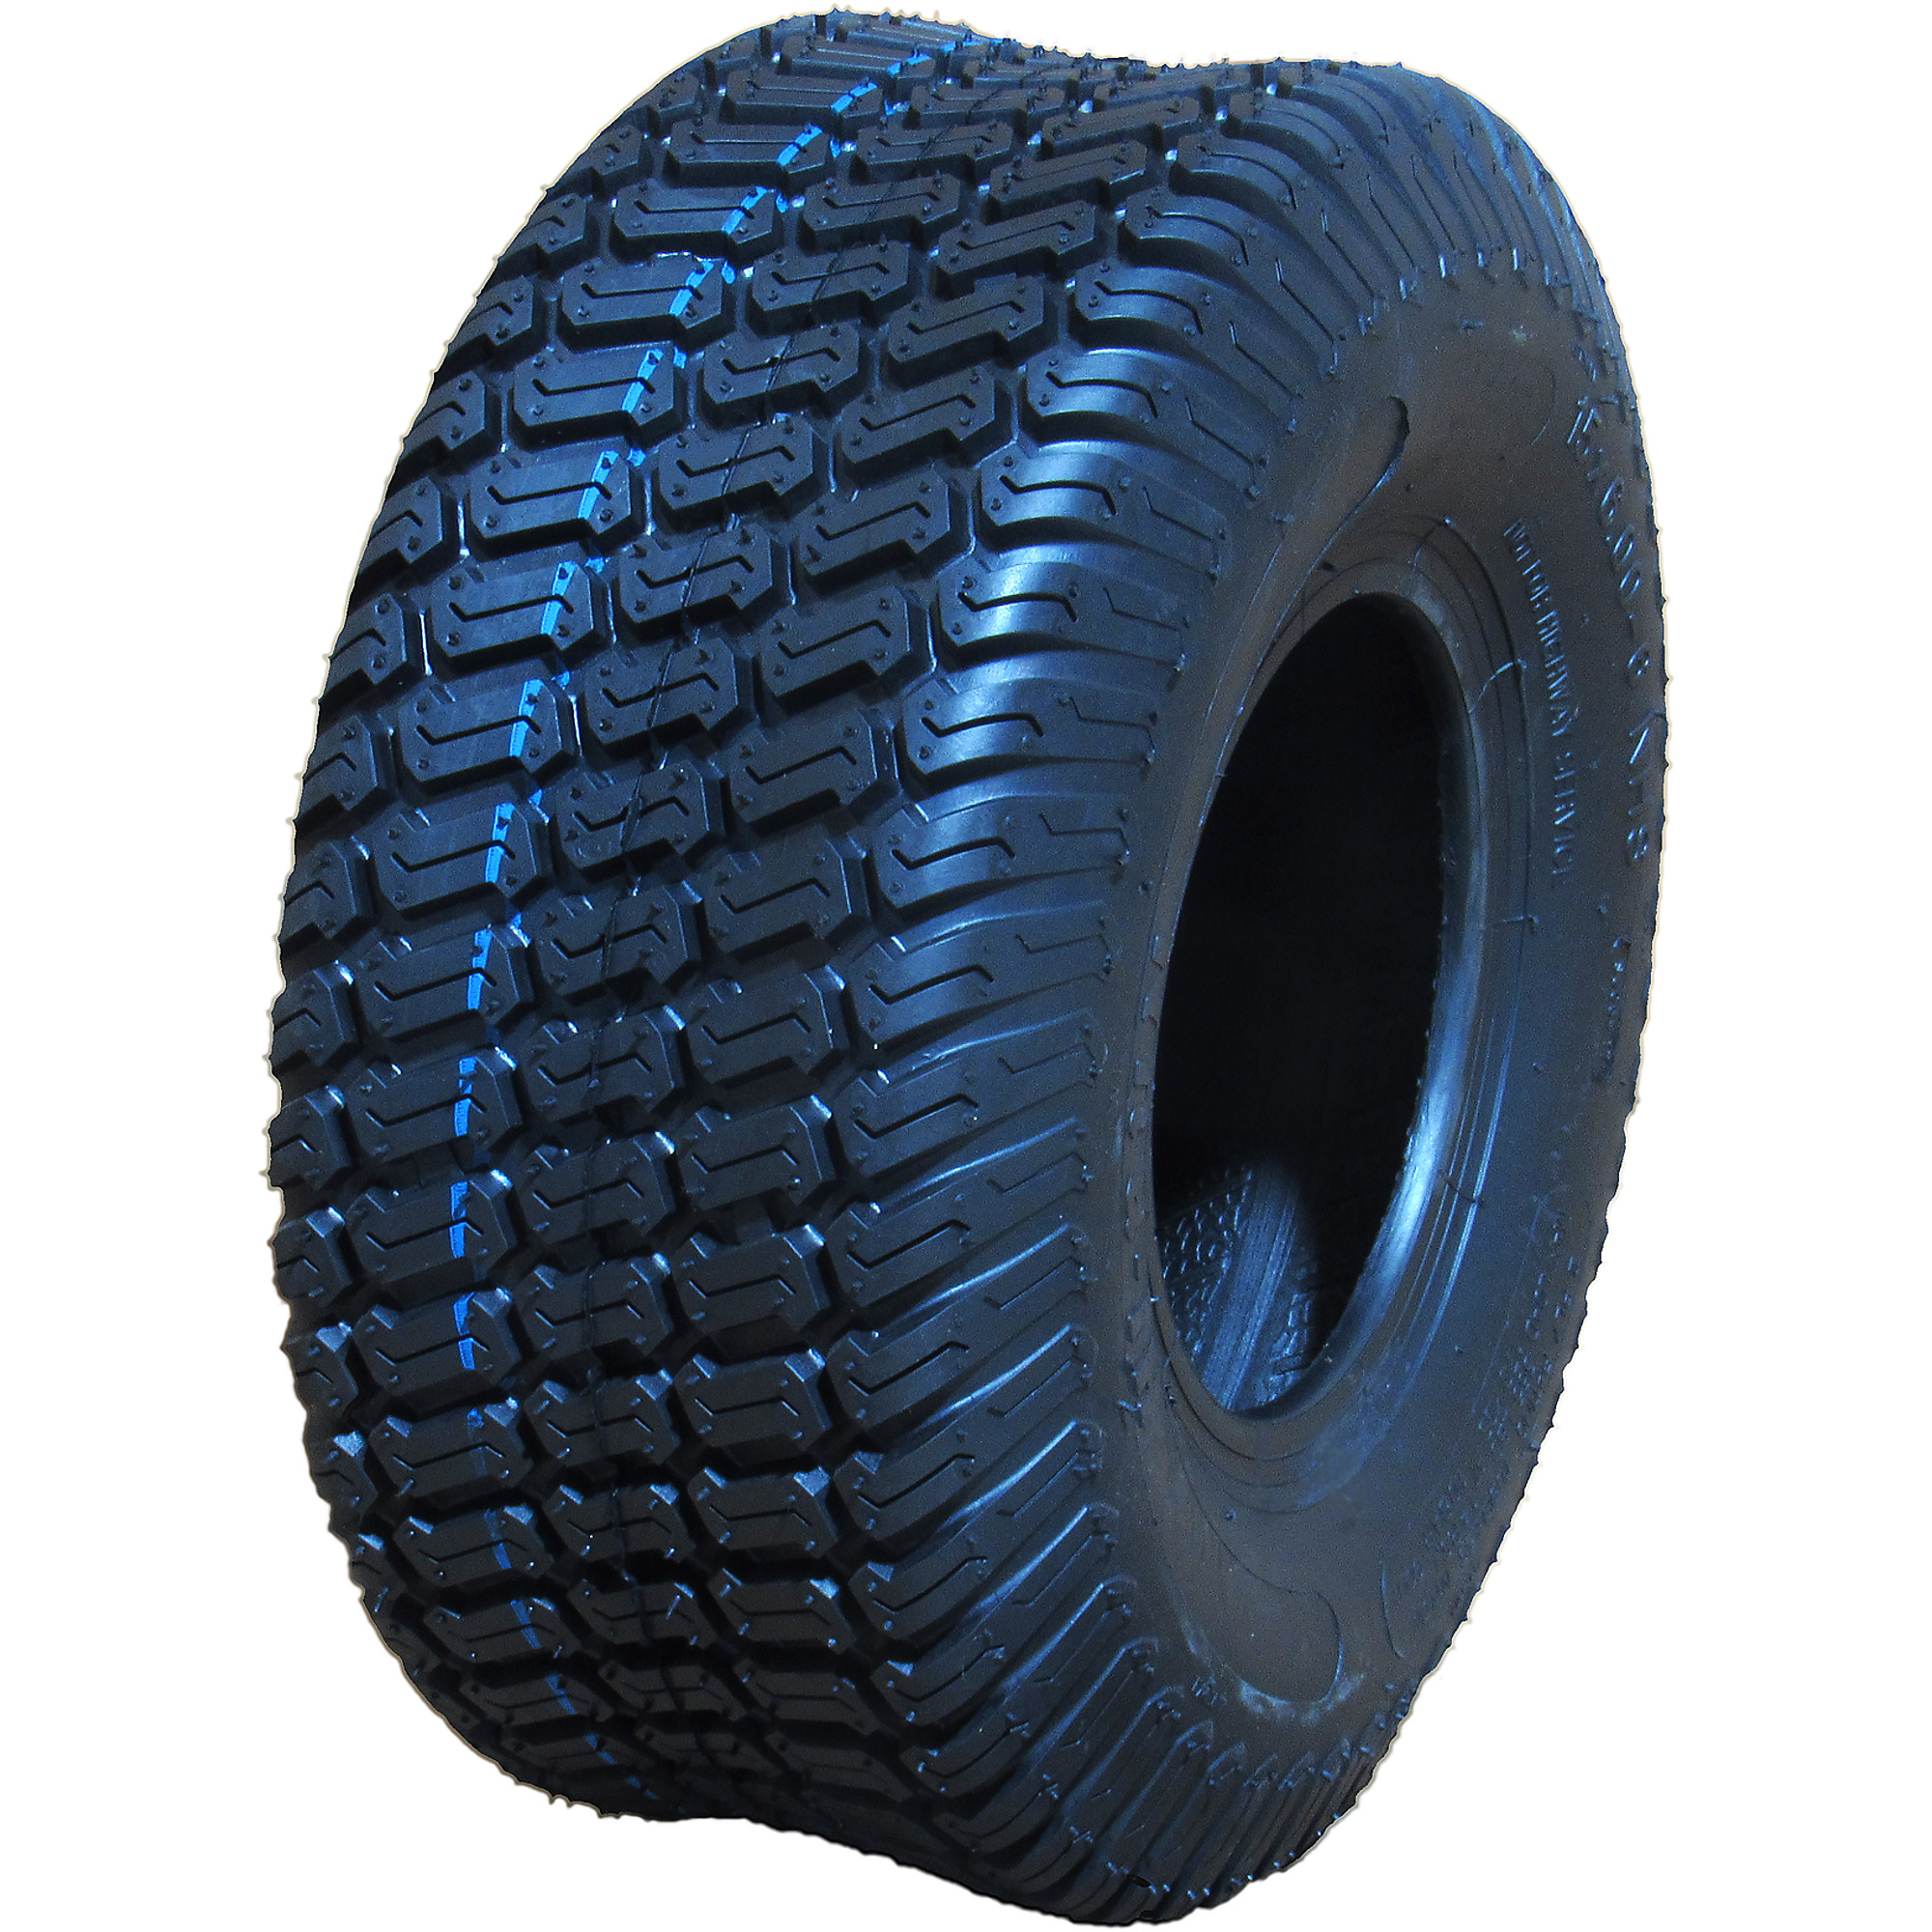 HI-RUN, Lawn Garden Tire, SU05 Turf, Tire Size 23X8.50-12 Load Range Rating B, Model WD1141